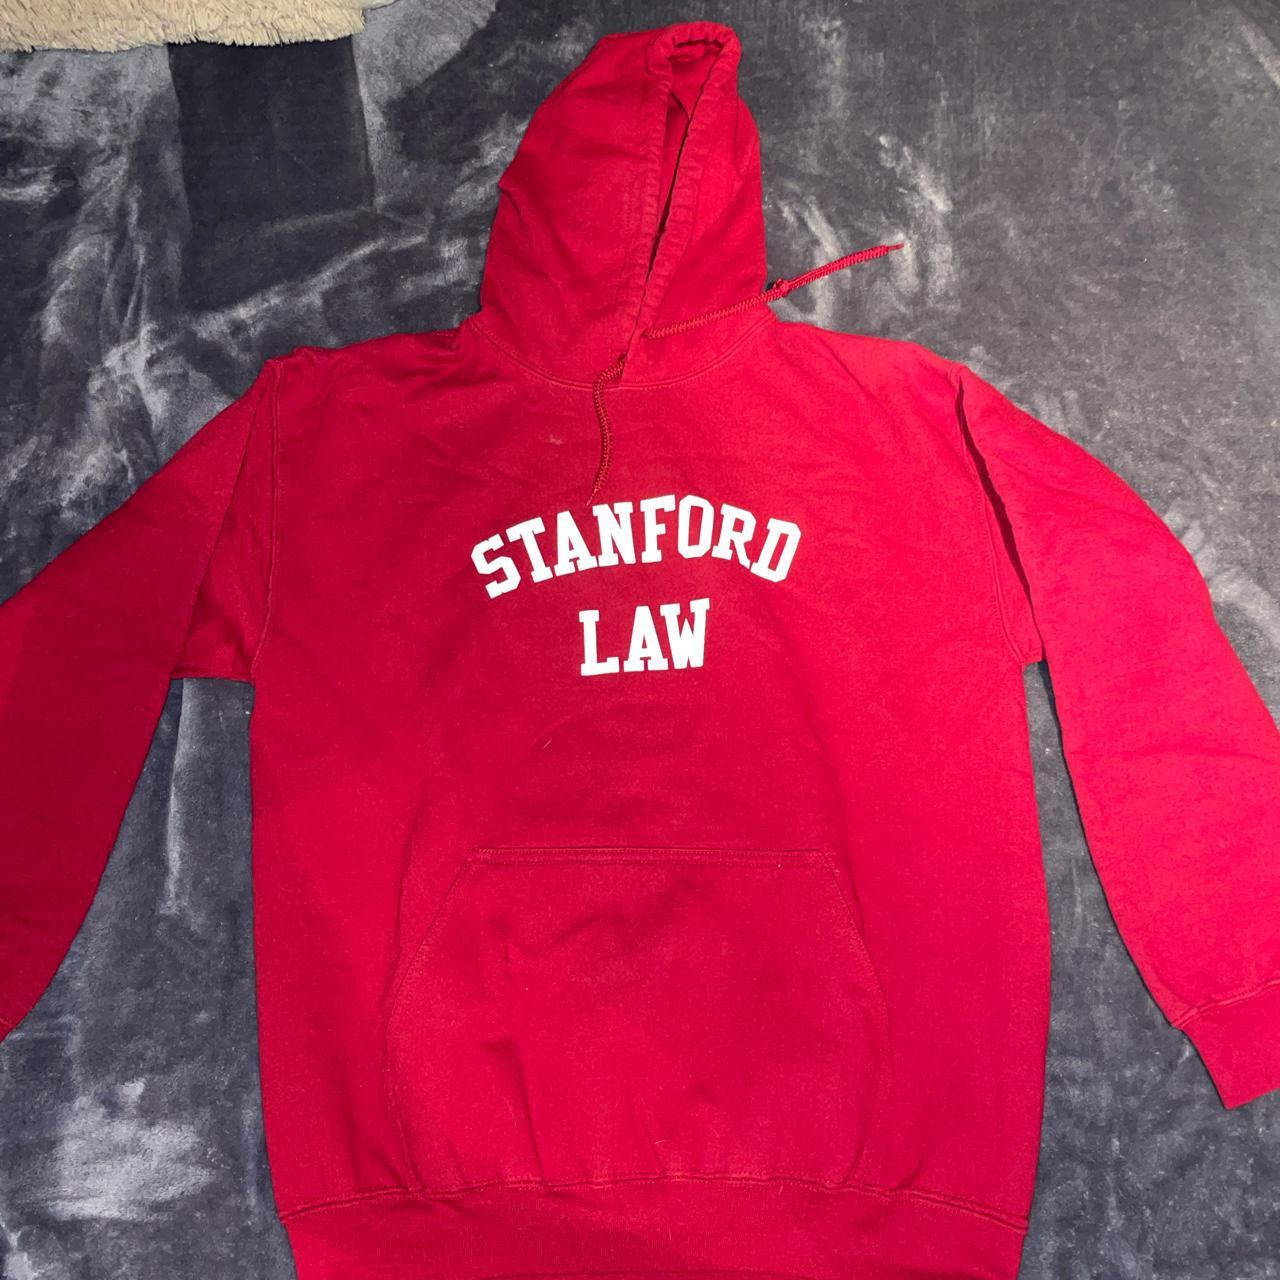 red stanford law hoodie super comfy #stanford #college - Depop